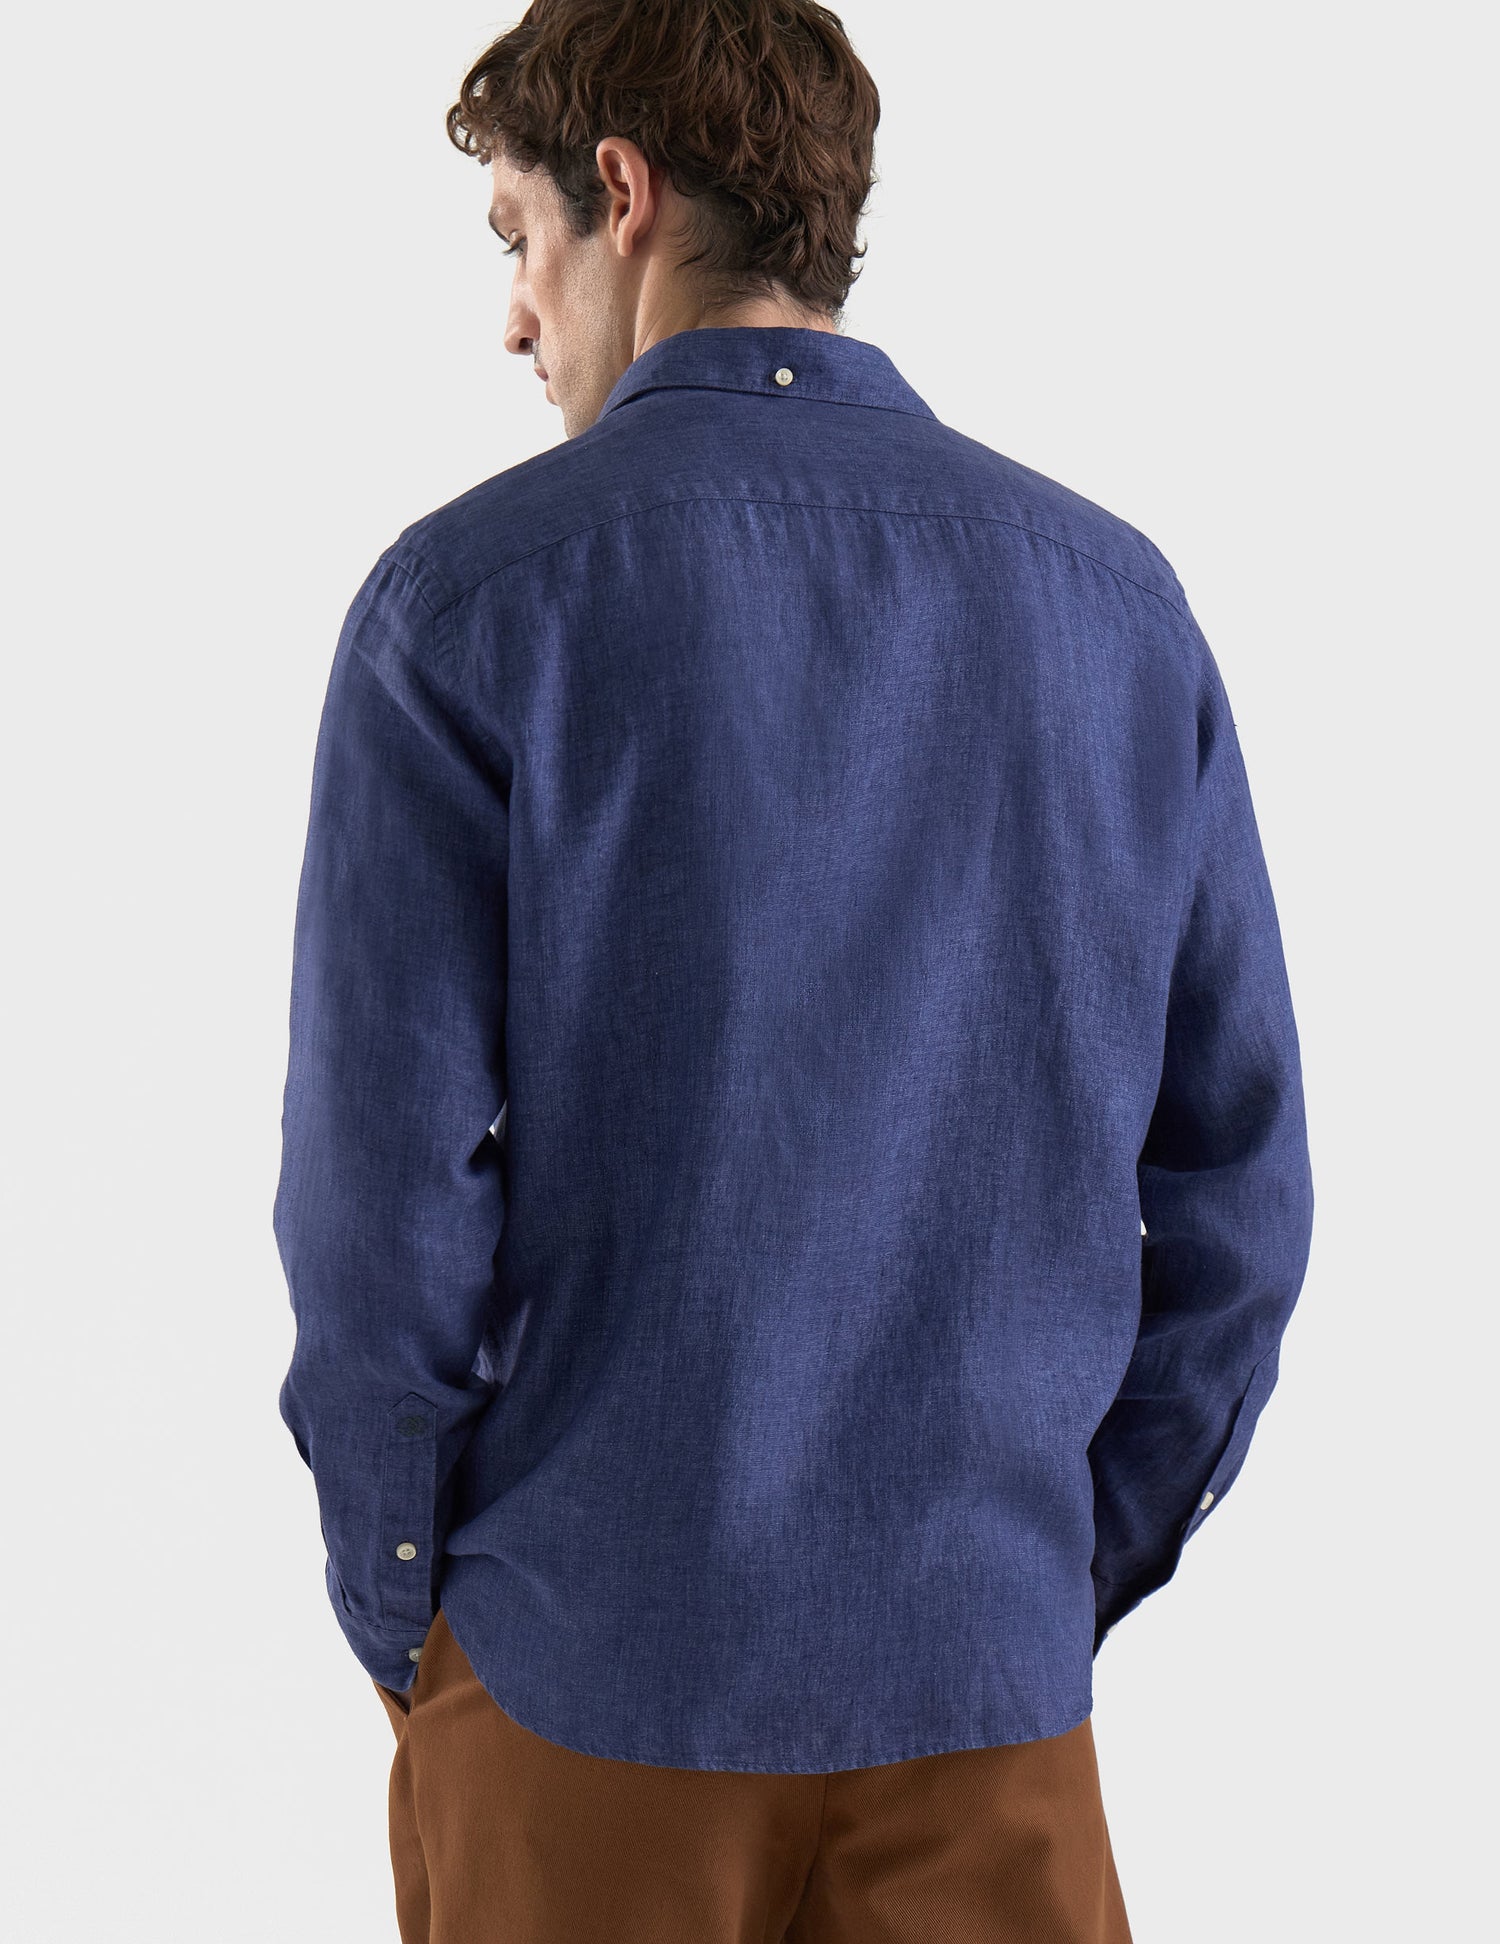 Aristote shirt in dark blue linen - Linen - Italian Collar#2